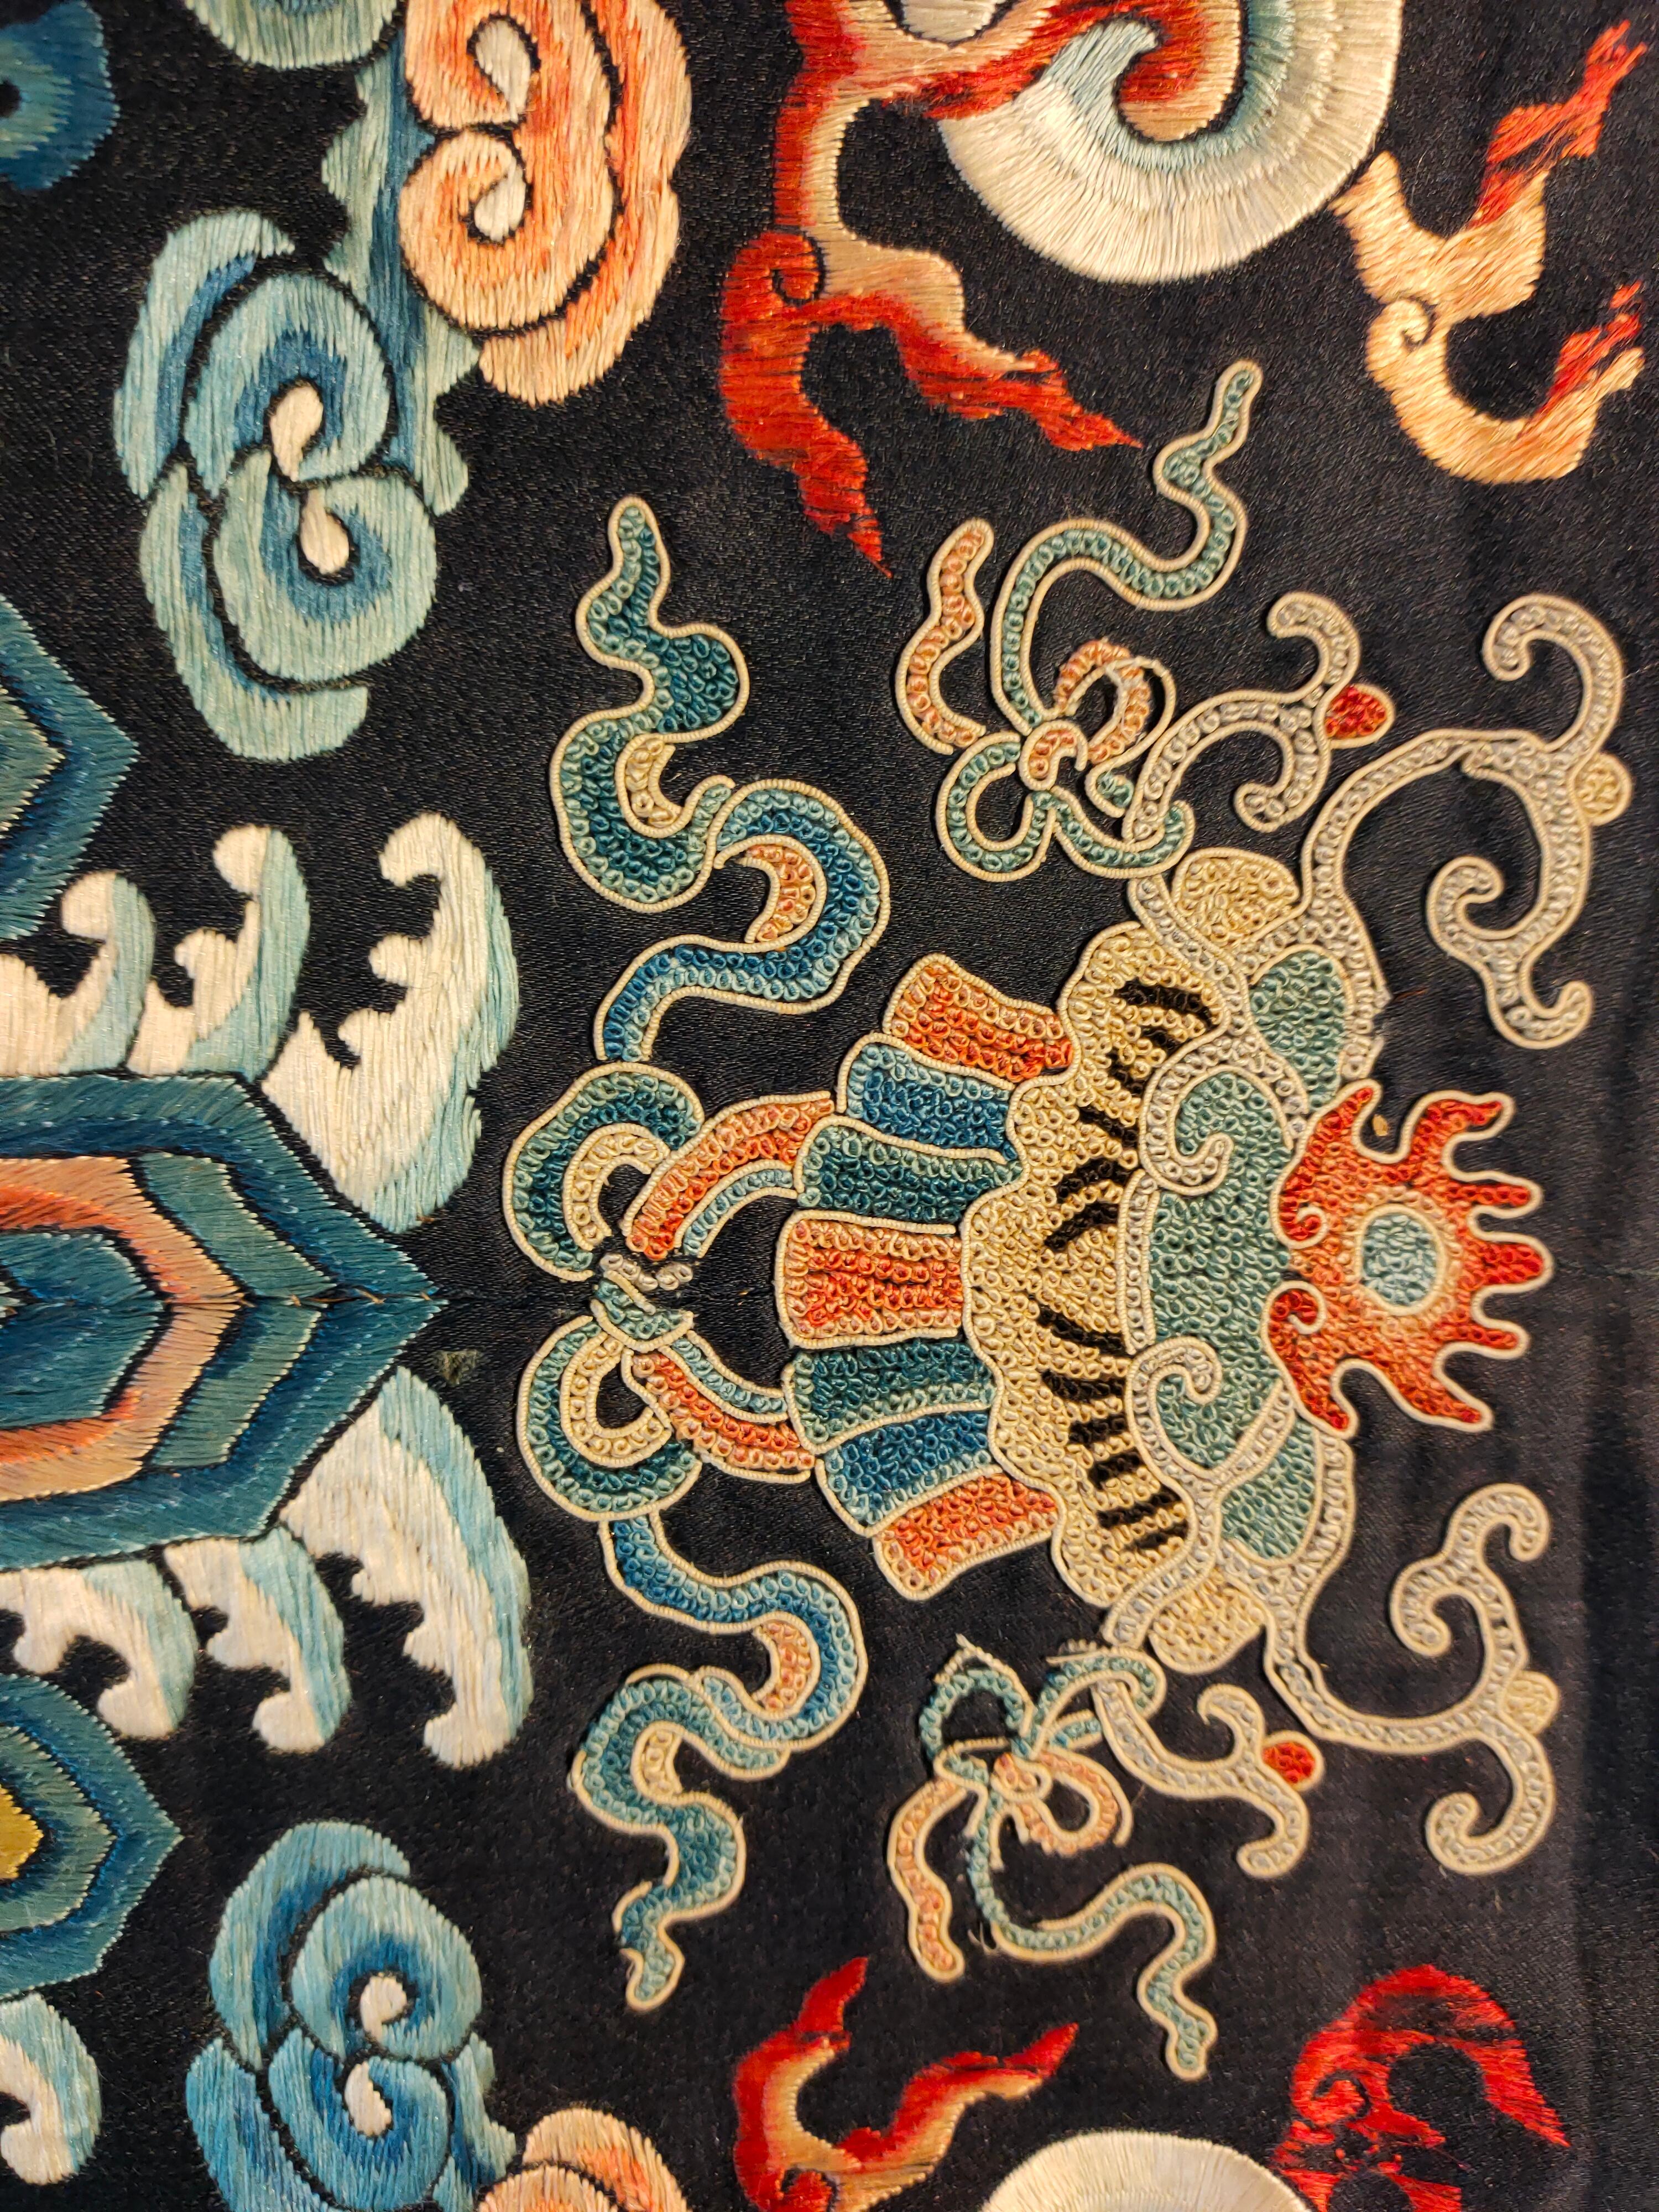 Late 19th Century 19th Century Chinese Silk & Metallic Thread Embroidery (2'6